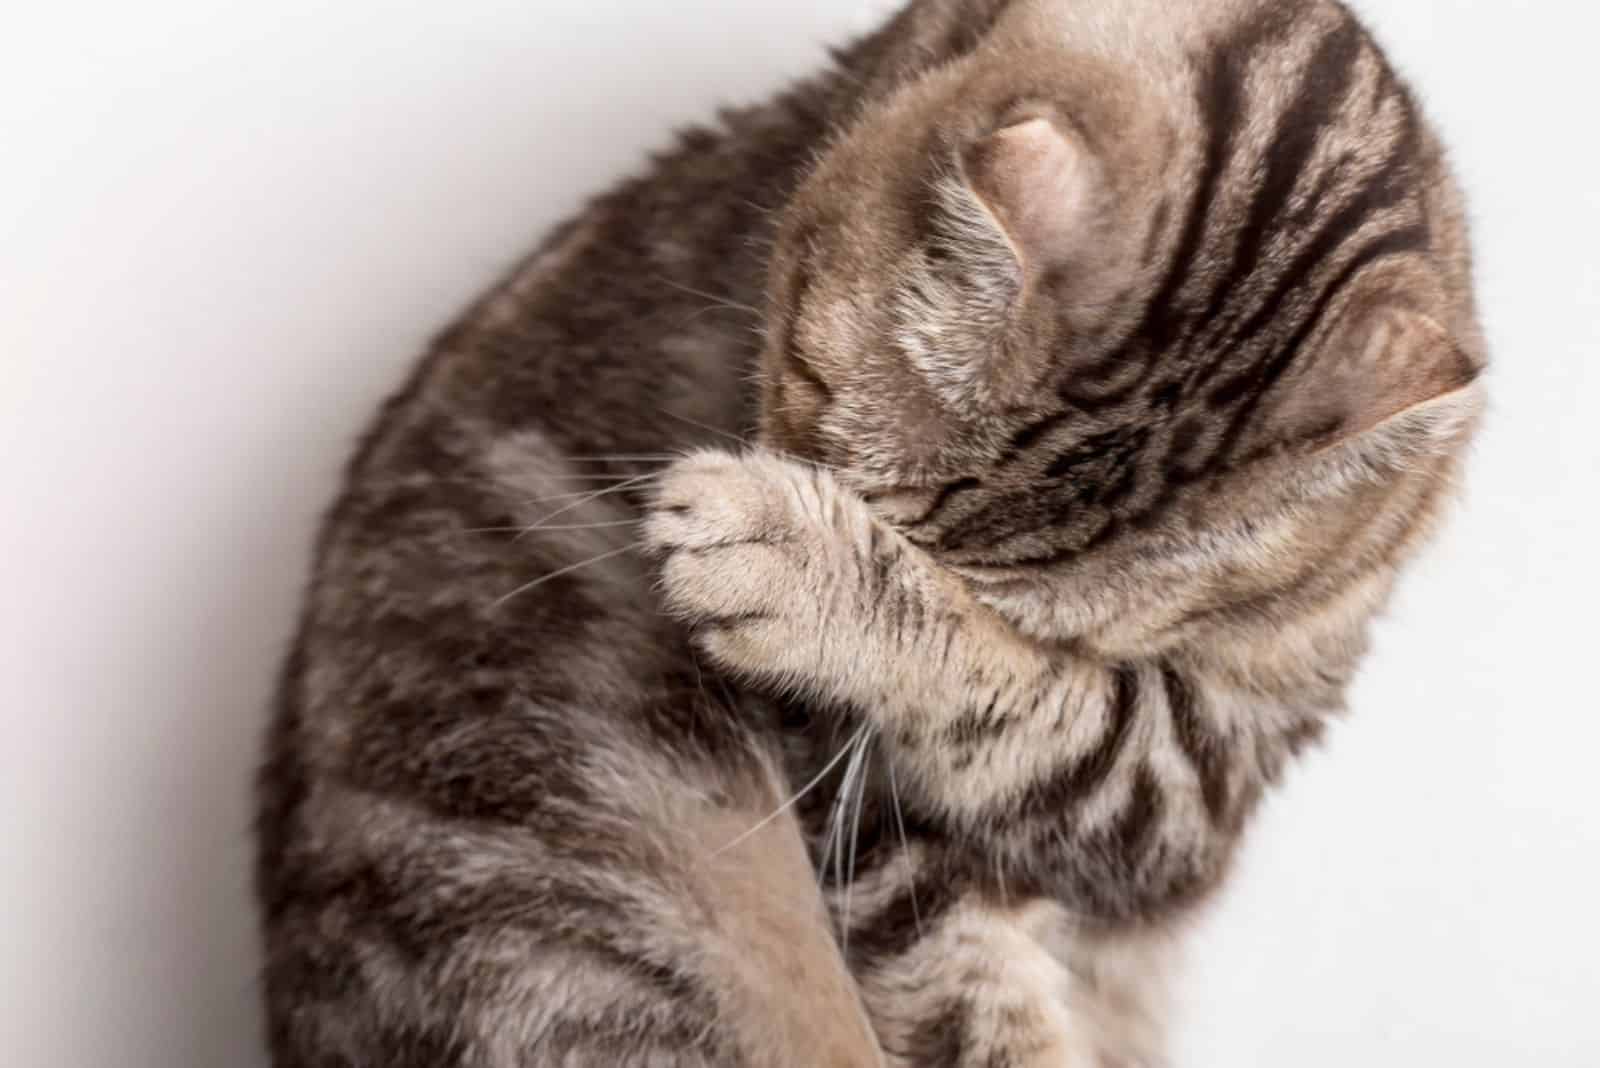 Cute sad cat Scottish Fold makes facepalm movement